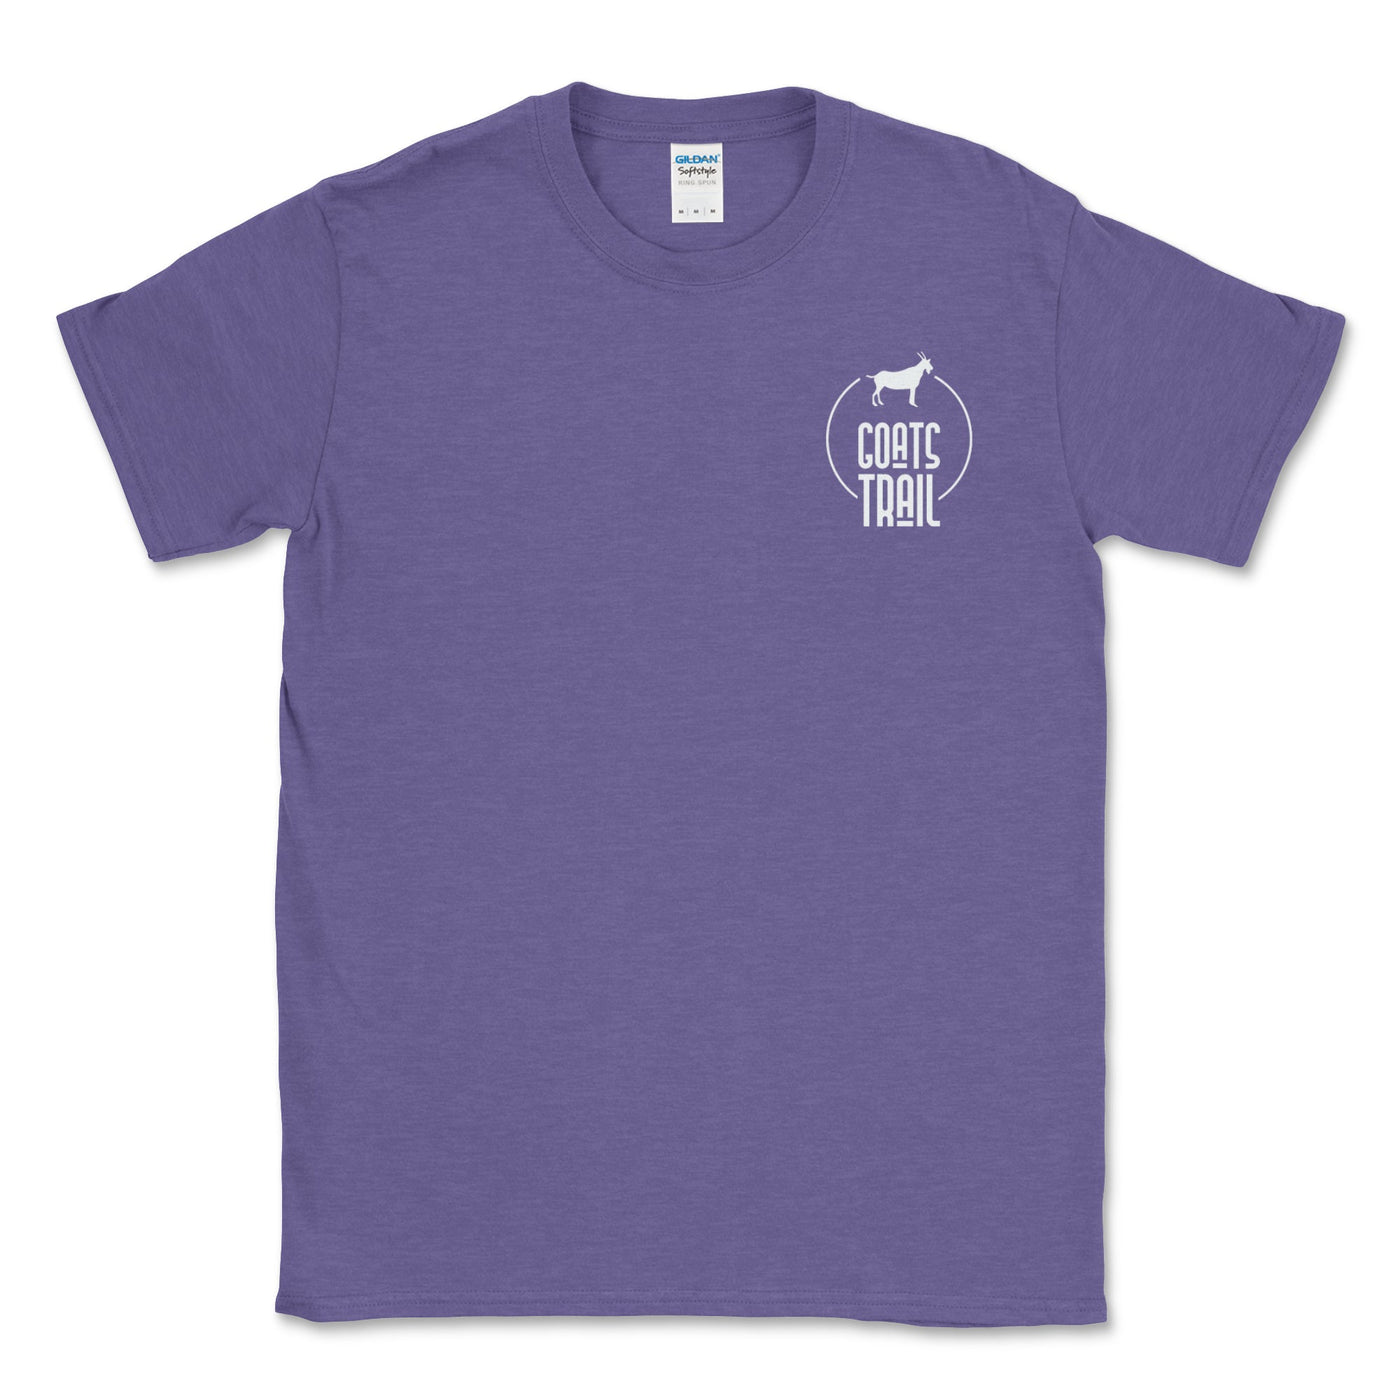 Just Gonna Send It Off-Road T-shirt - Goats Trail Off-Road Apparel Company